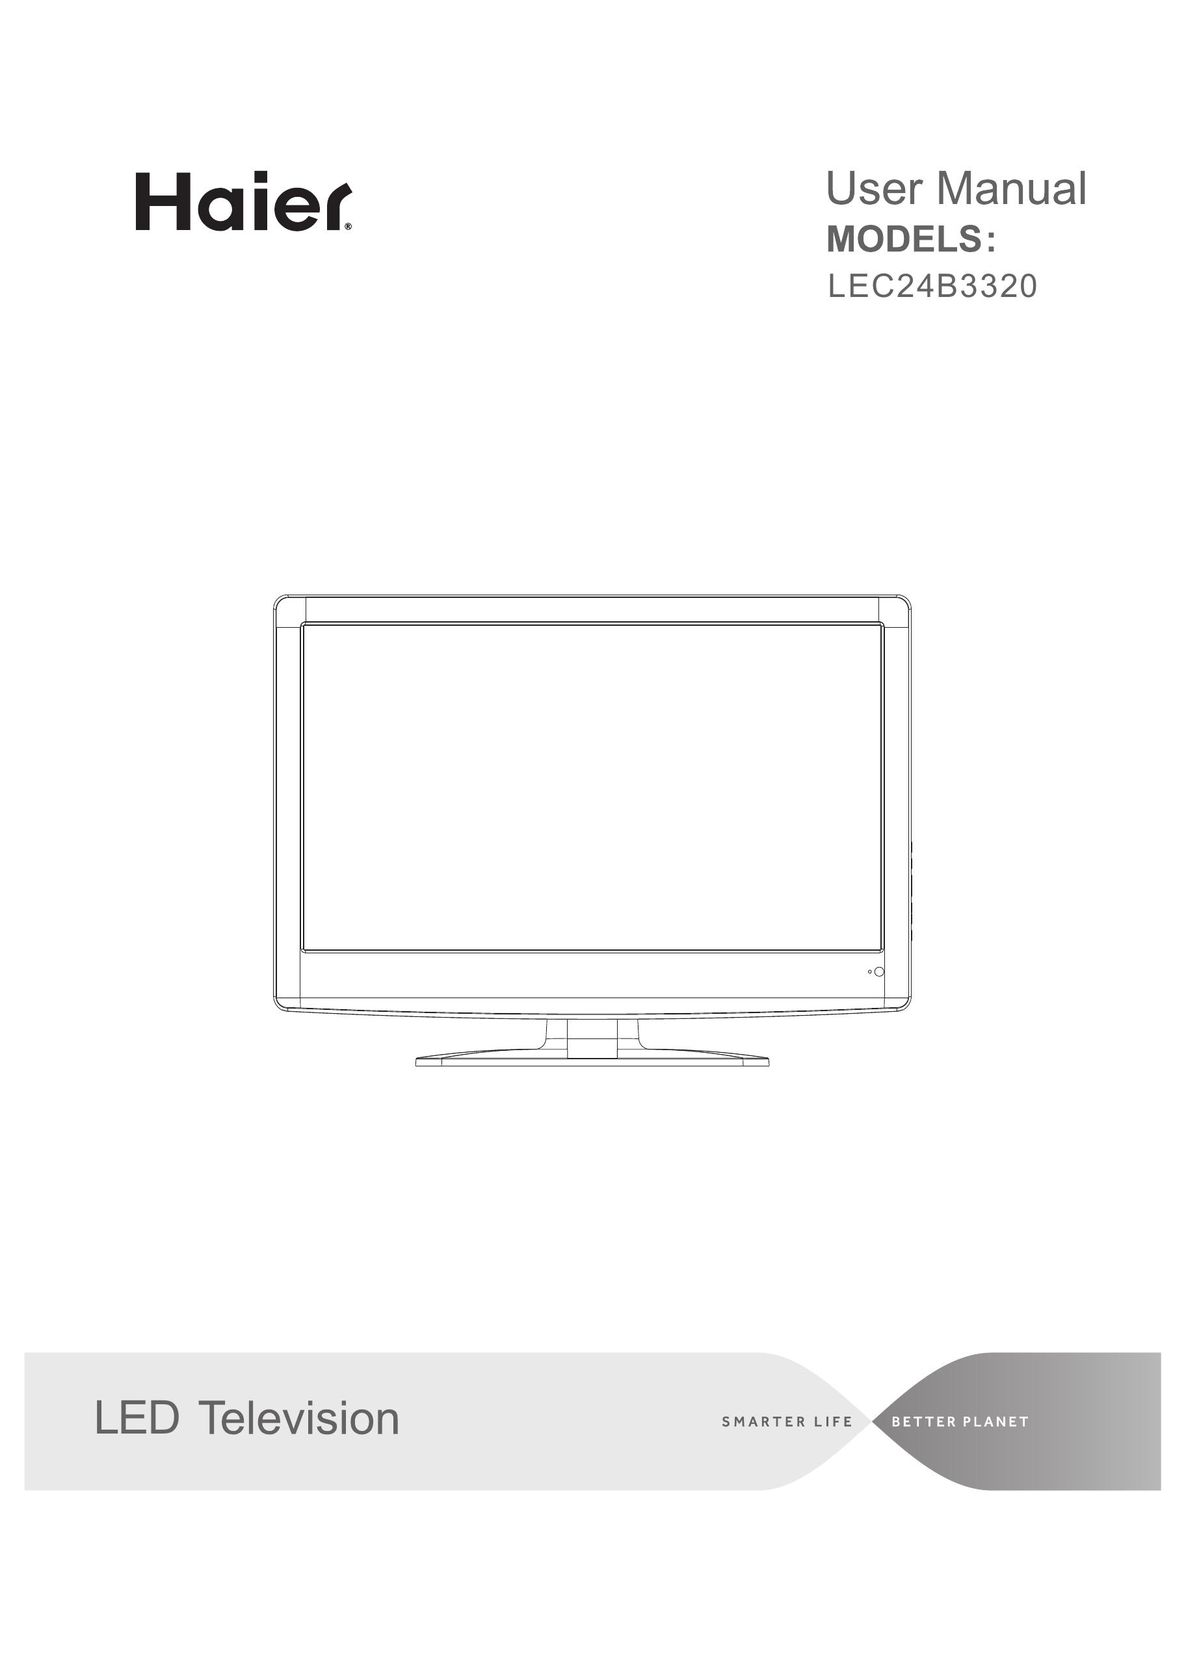 Haier LEC24B3320 CRT Television User Manual